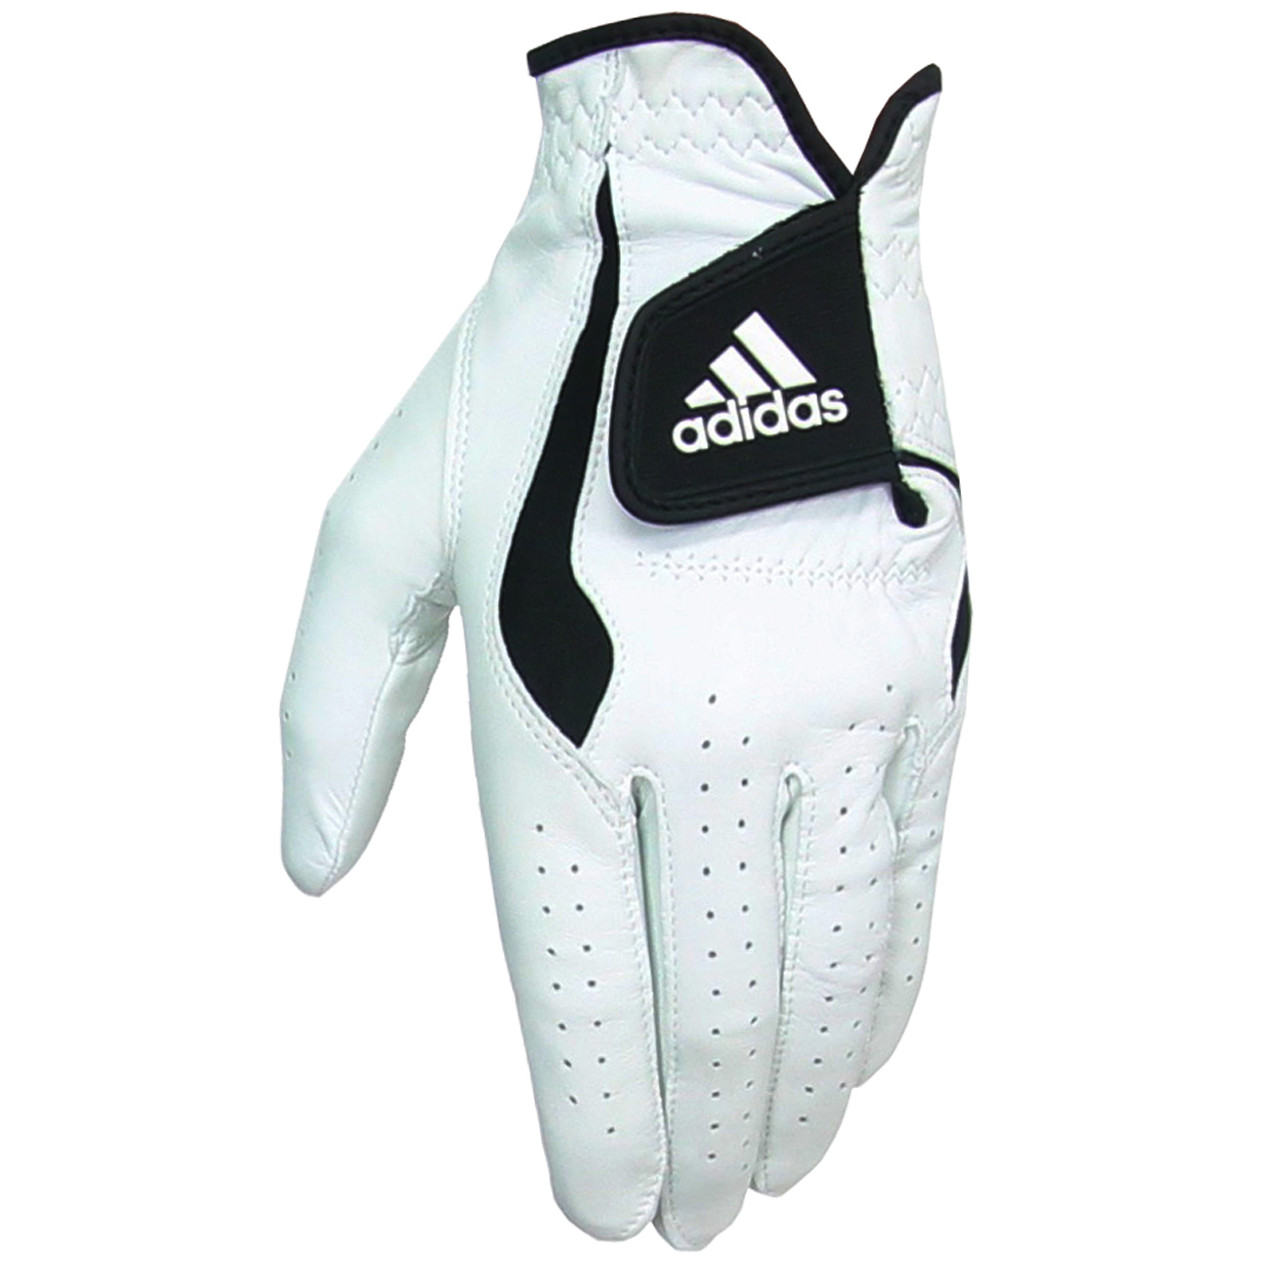 adidas golf glove